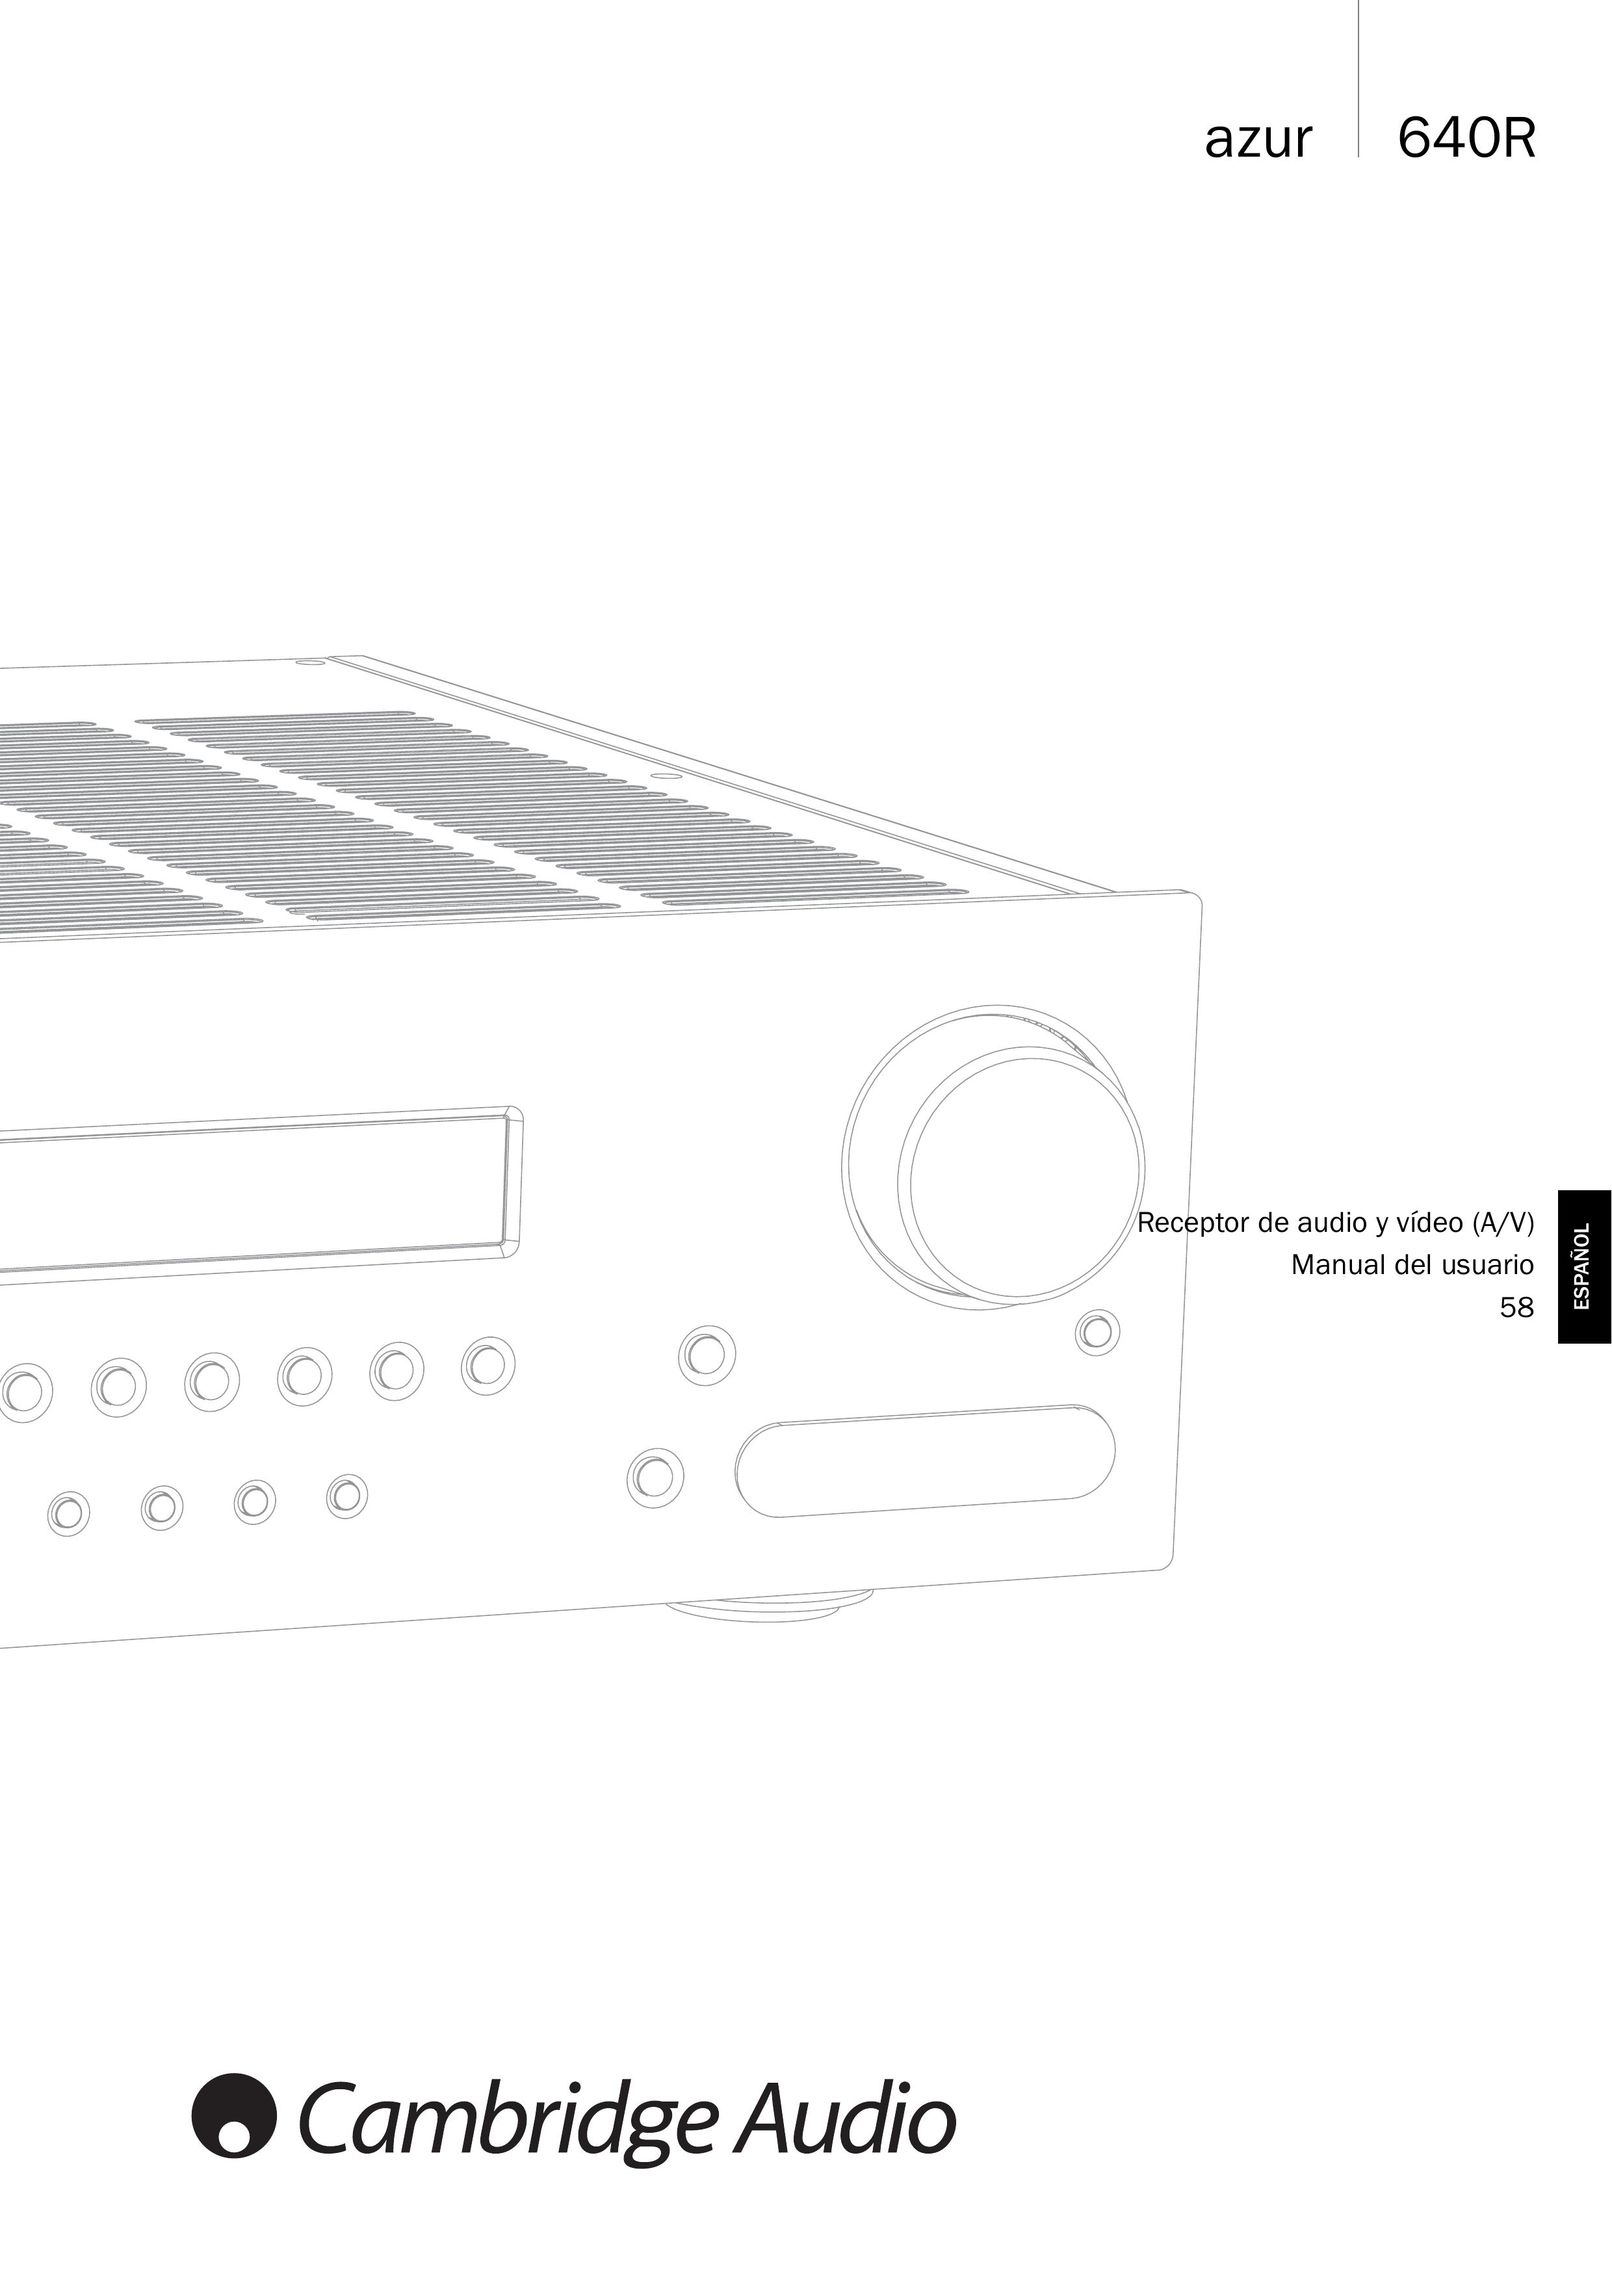 Cambridge Audio 640R Stereo System User Manual